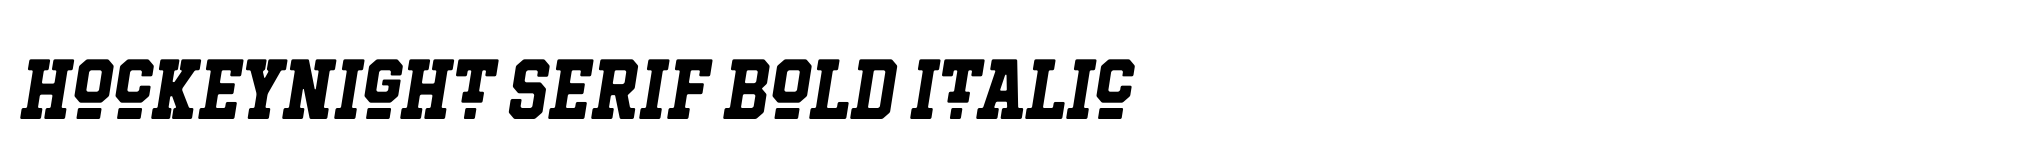 Hockeynight Serif Bold Italic image